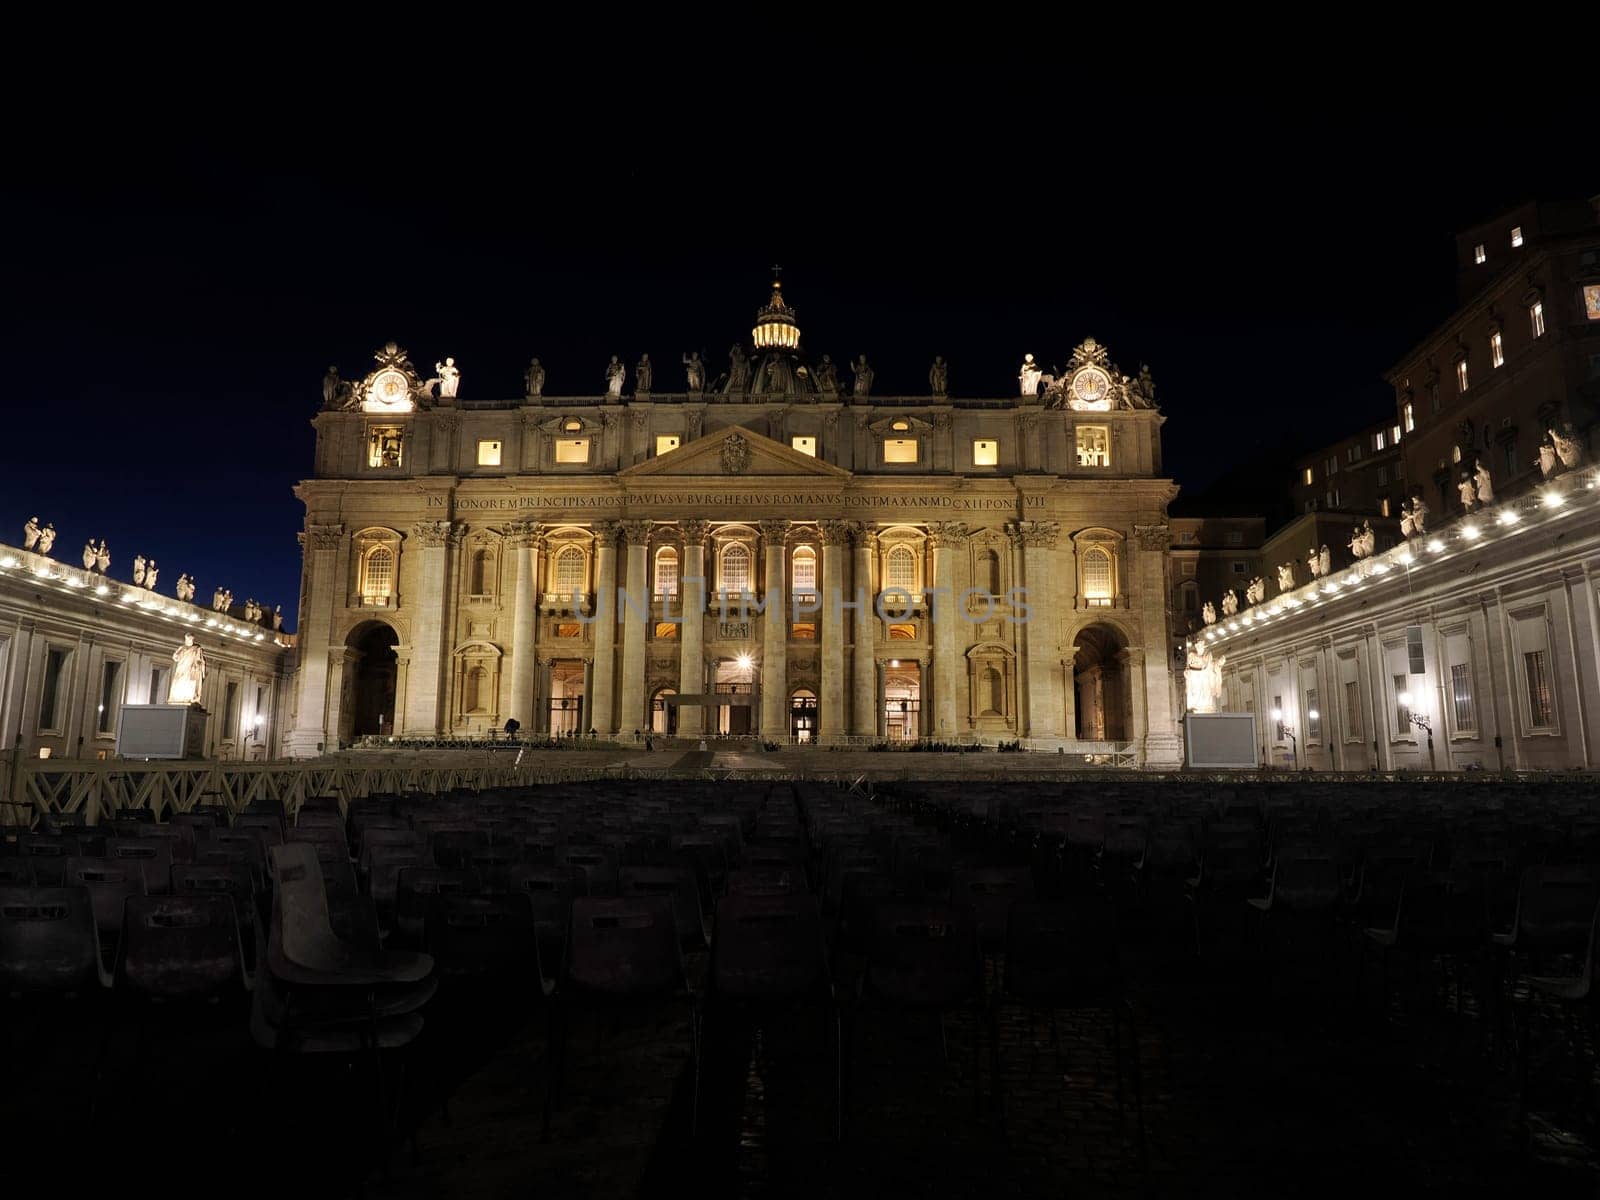 saint peter basilica rome view at night by AndreaIzzotti